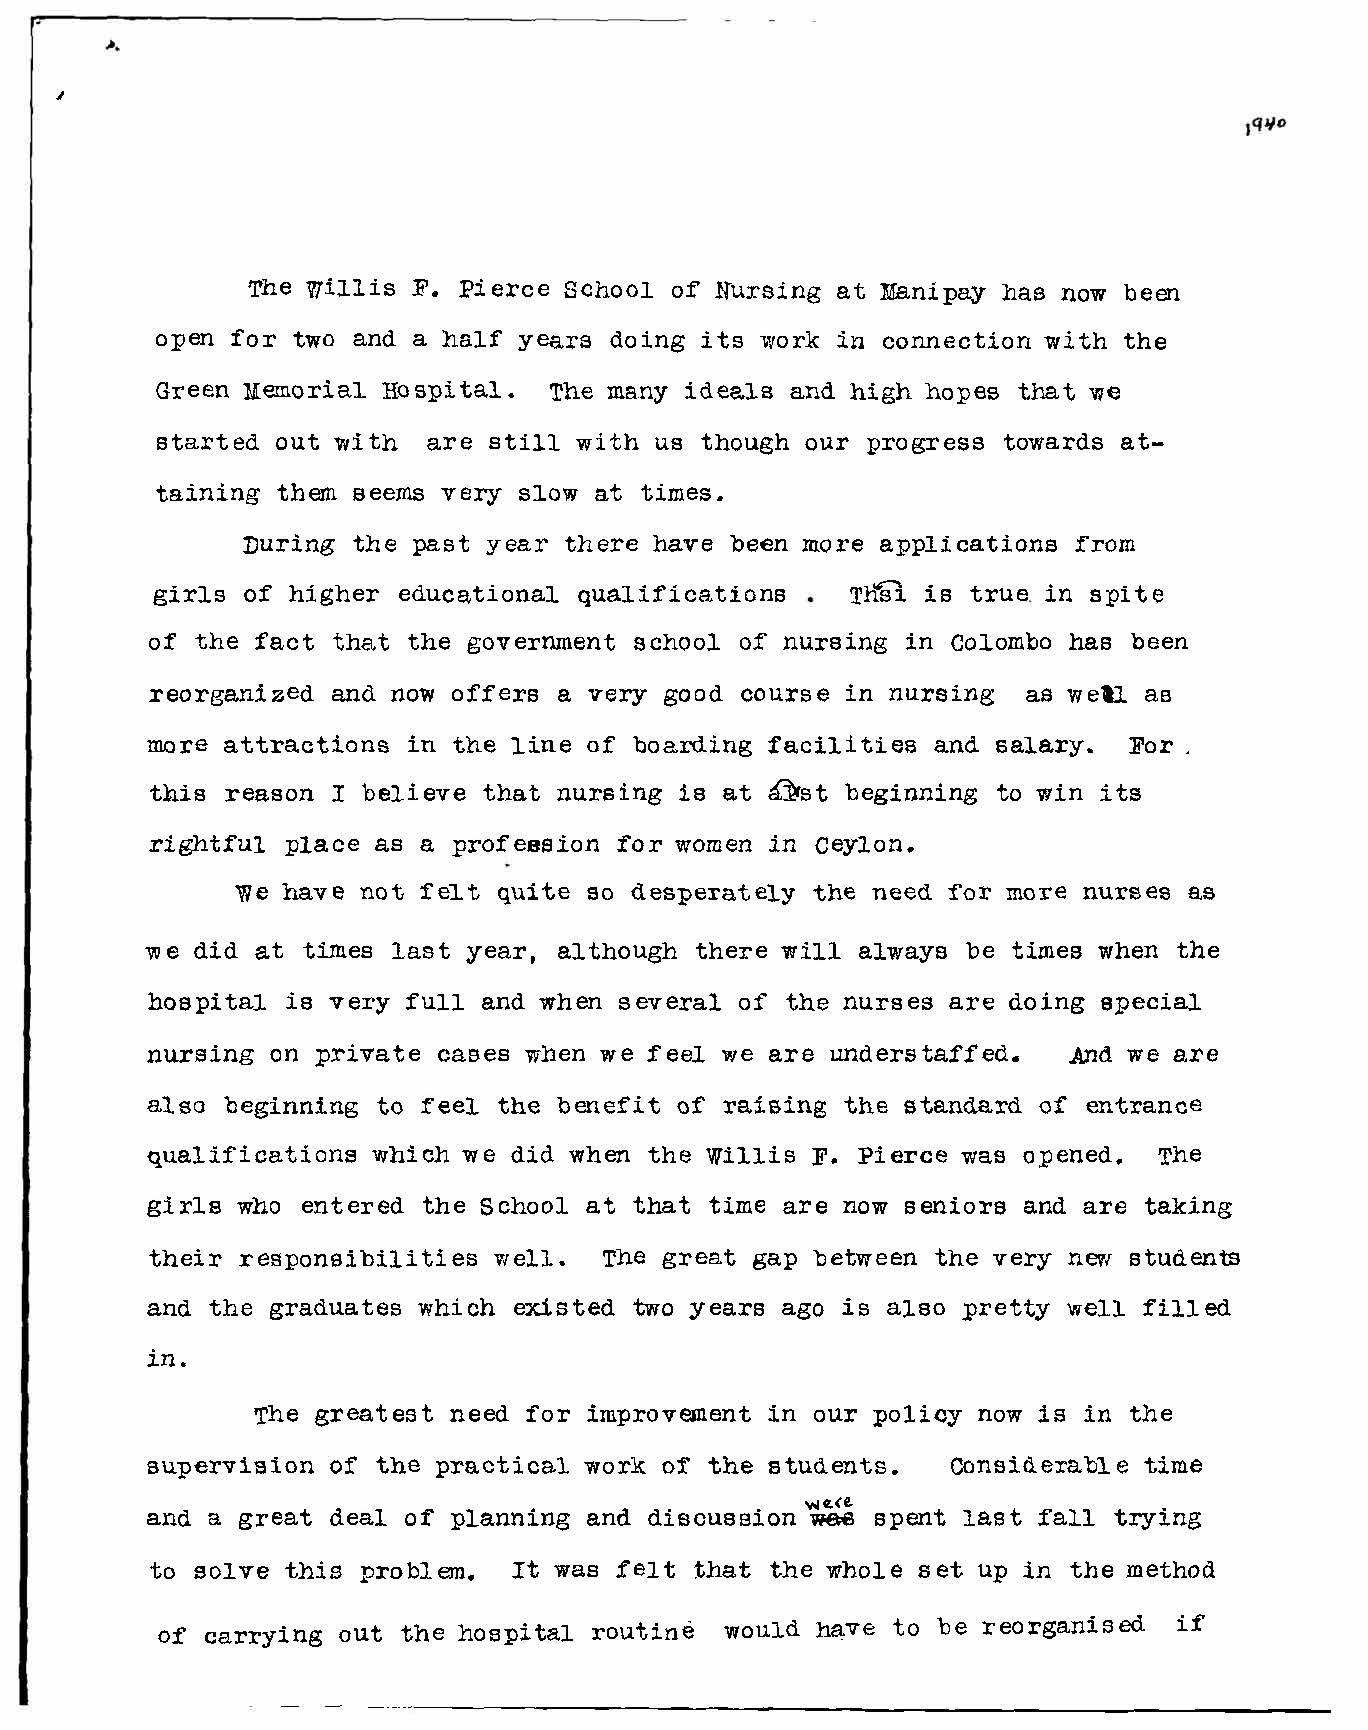 willis-pierce-school-of-nursing-annual-report-1940_page_2